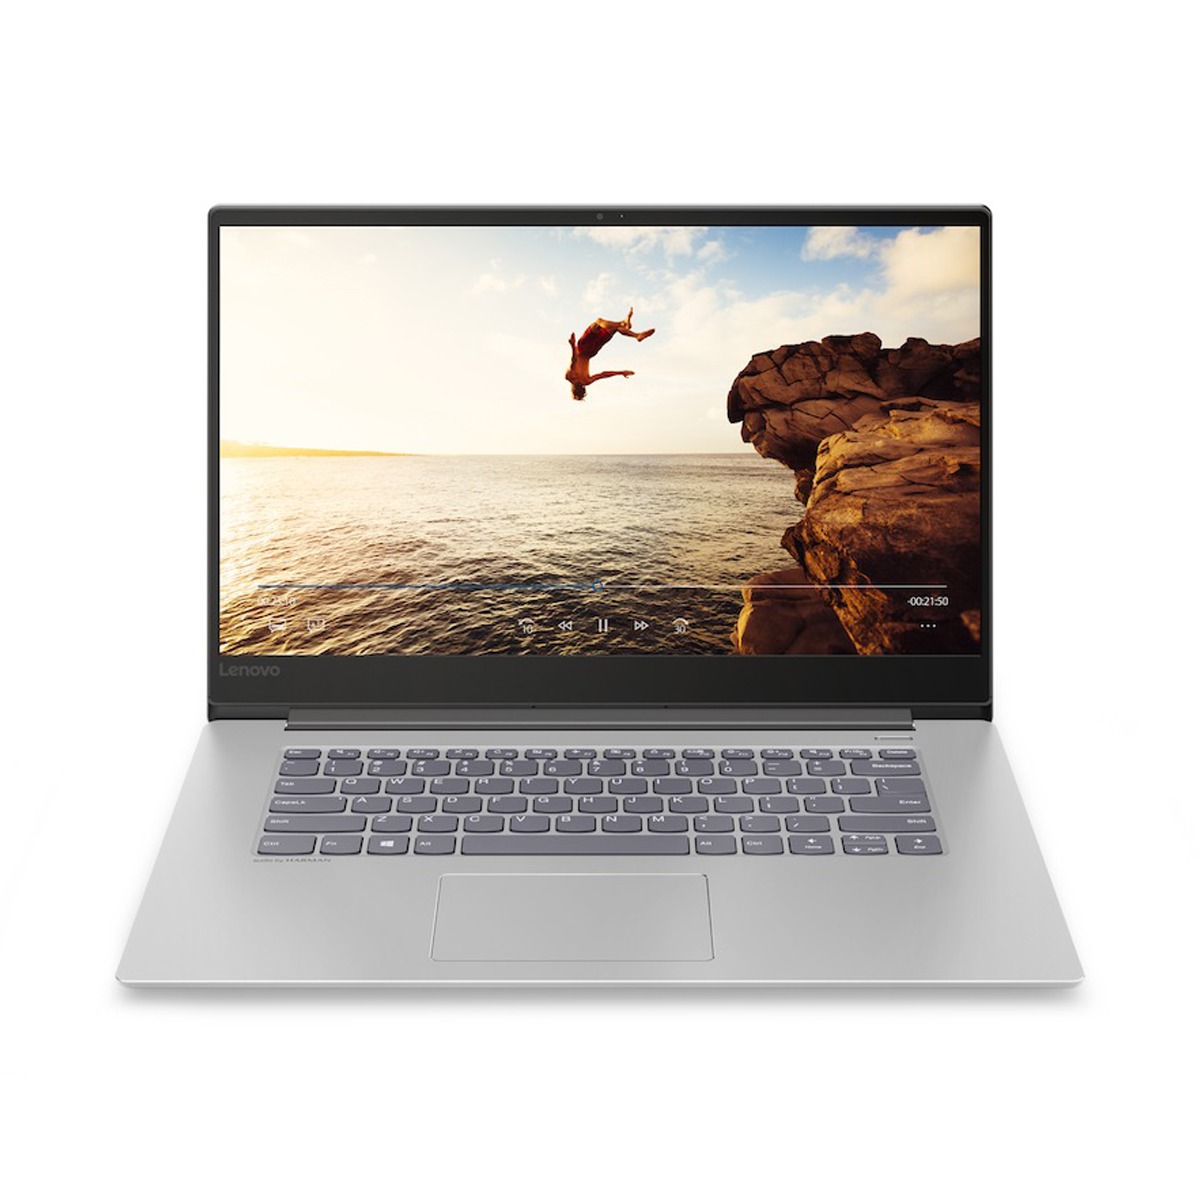 Lenovo laptop Ideapad 530S-15IKB 81EV00DQMH - GeForce MX150, 8 GB RAM, 512 GB SSD, 15.6 inch